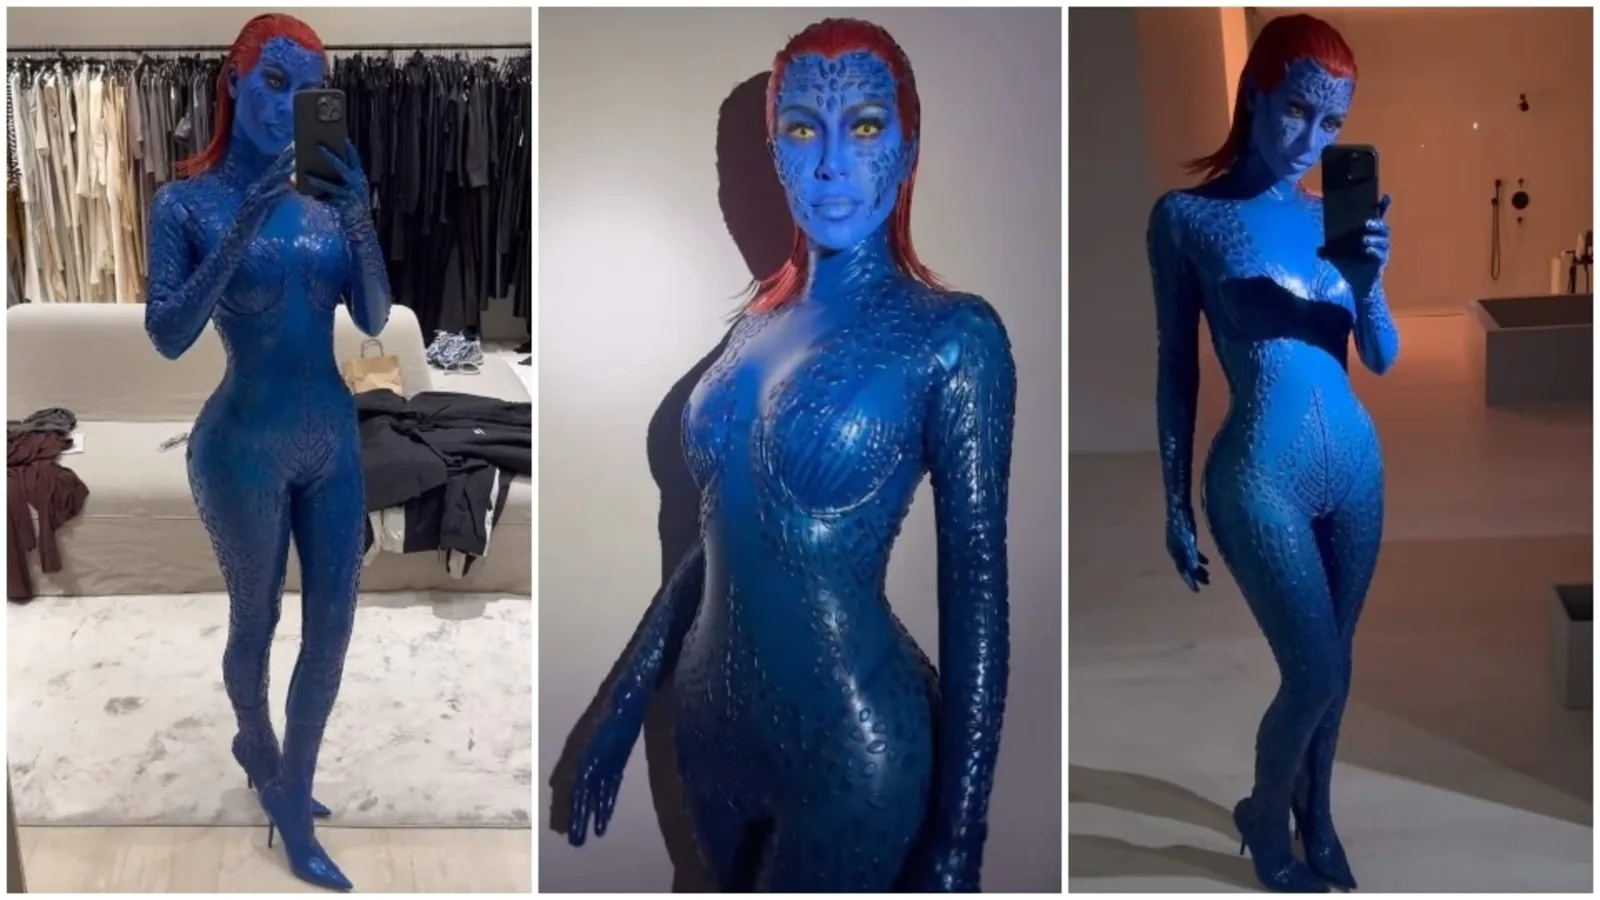 Kim Kardashian oozes sex appeal in blue latex costume as X-Men's